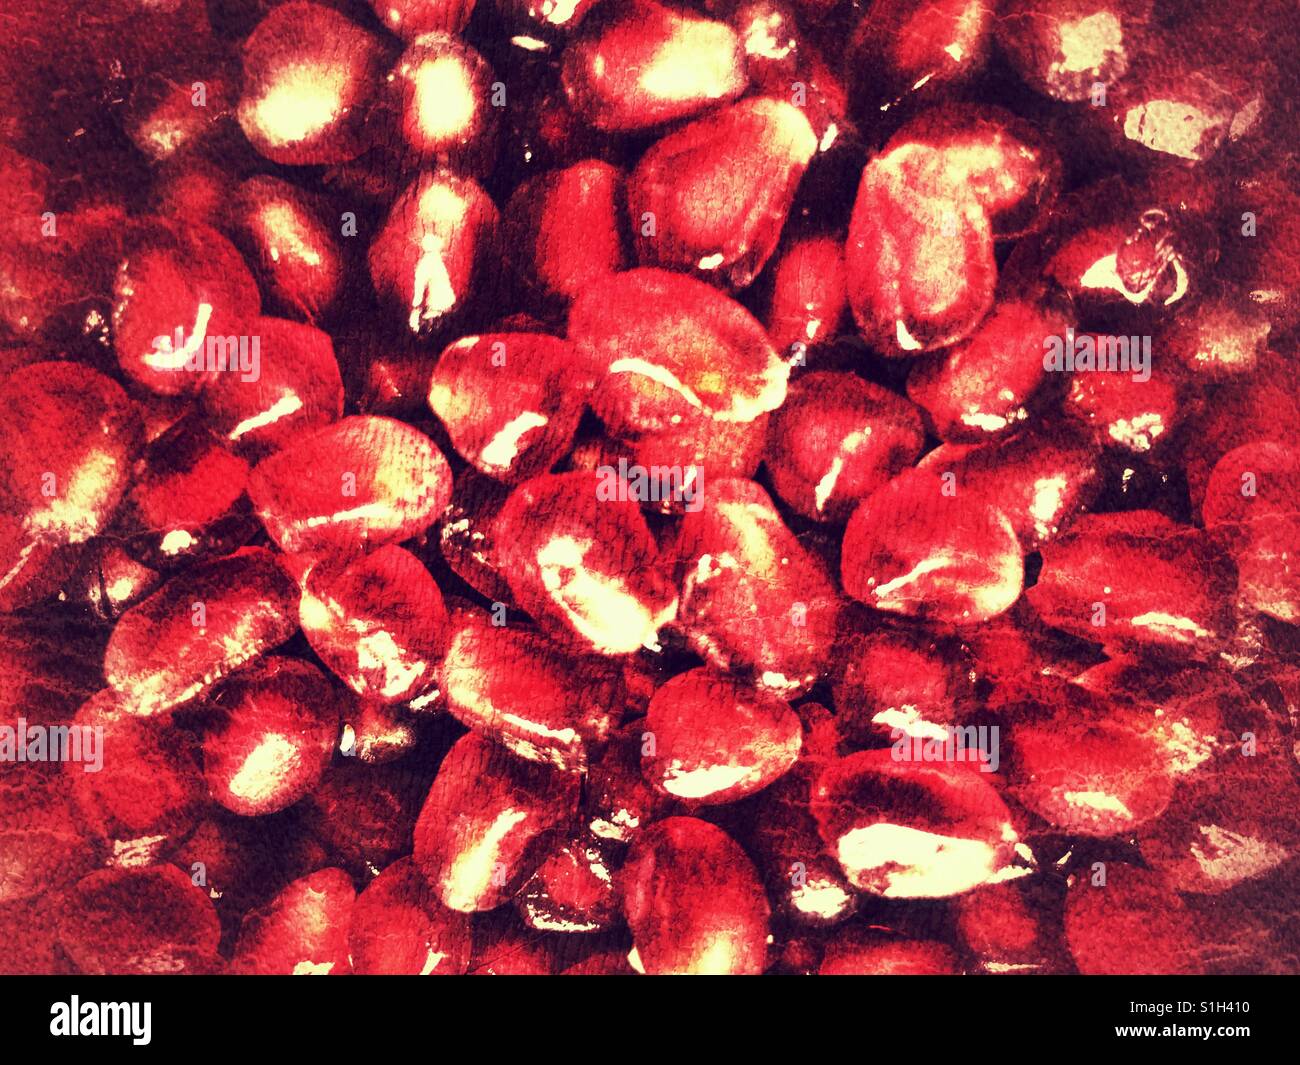 Pomegranate arils (seeds) Stock Photo